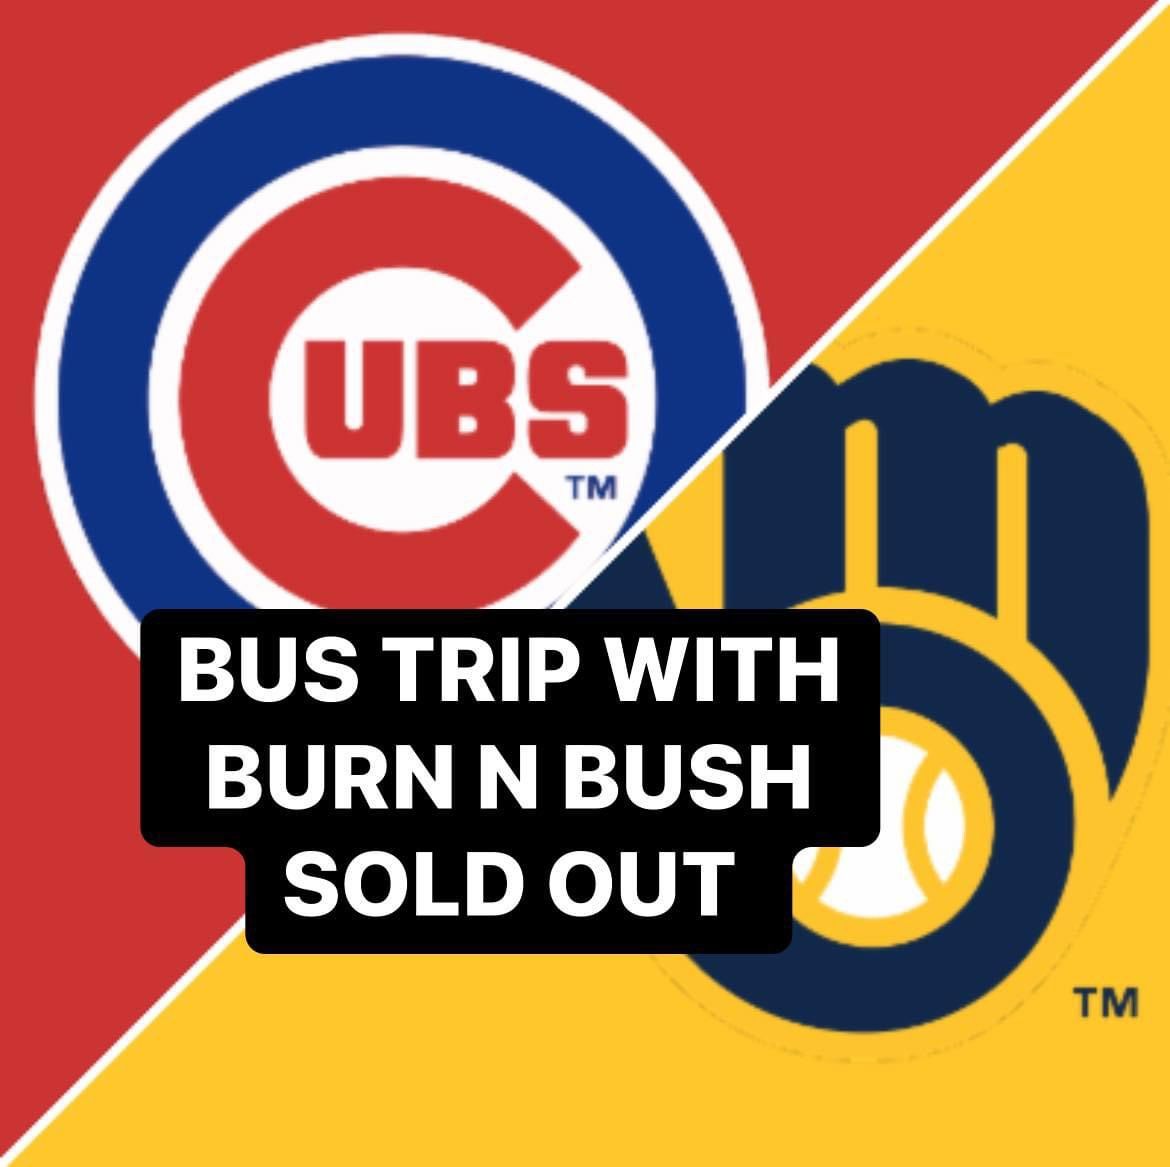 Cubs vs Brewers bus trip 